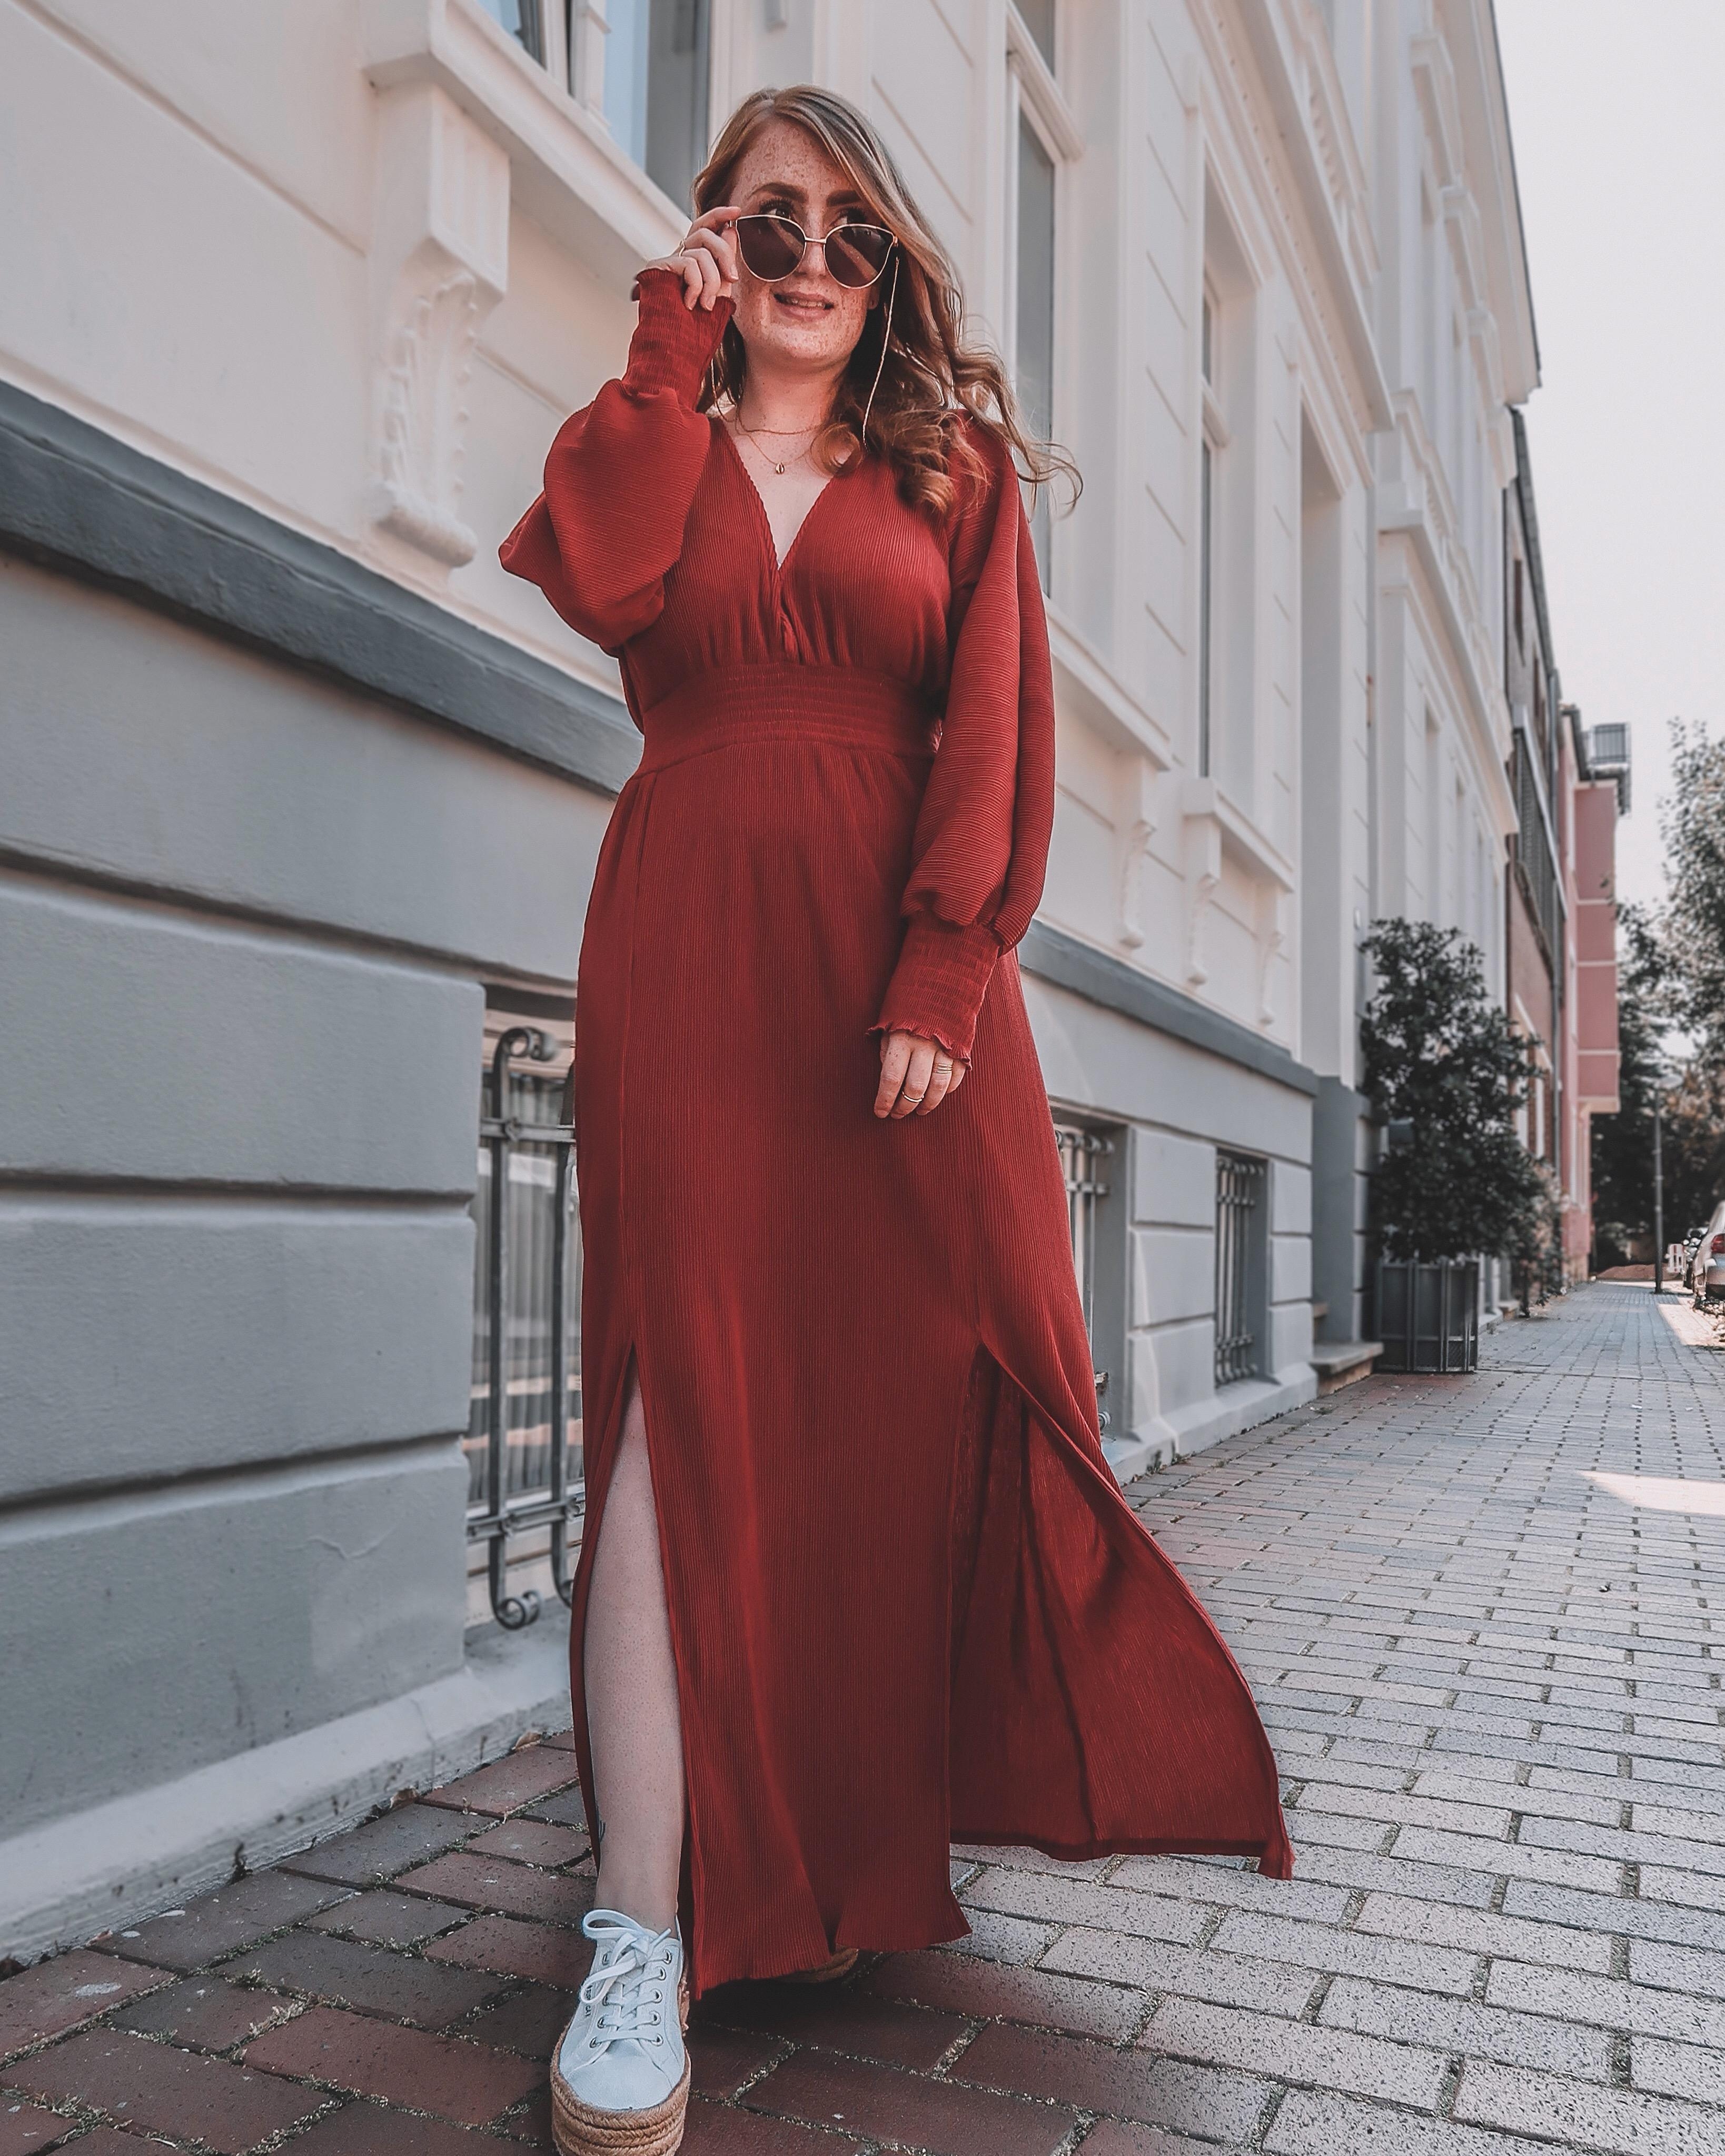 Lady in Red 💃🏻
#maxikleid #reddress #asos #streetstyle #fashionchallenge #gewinn 